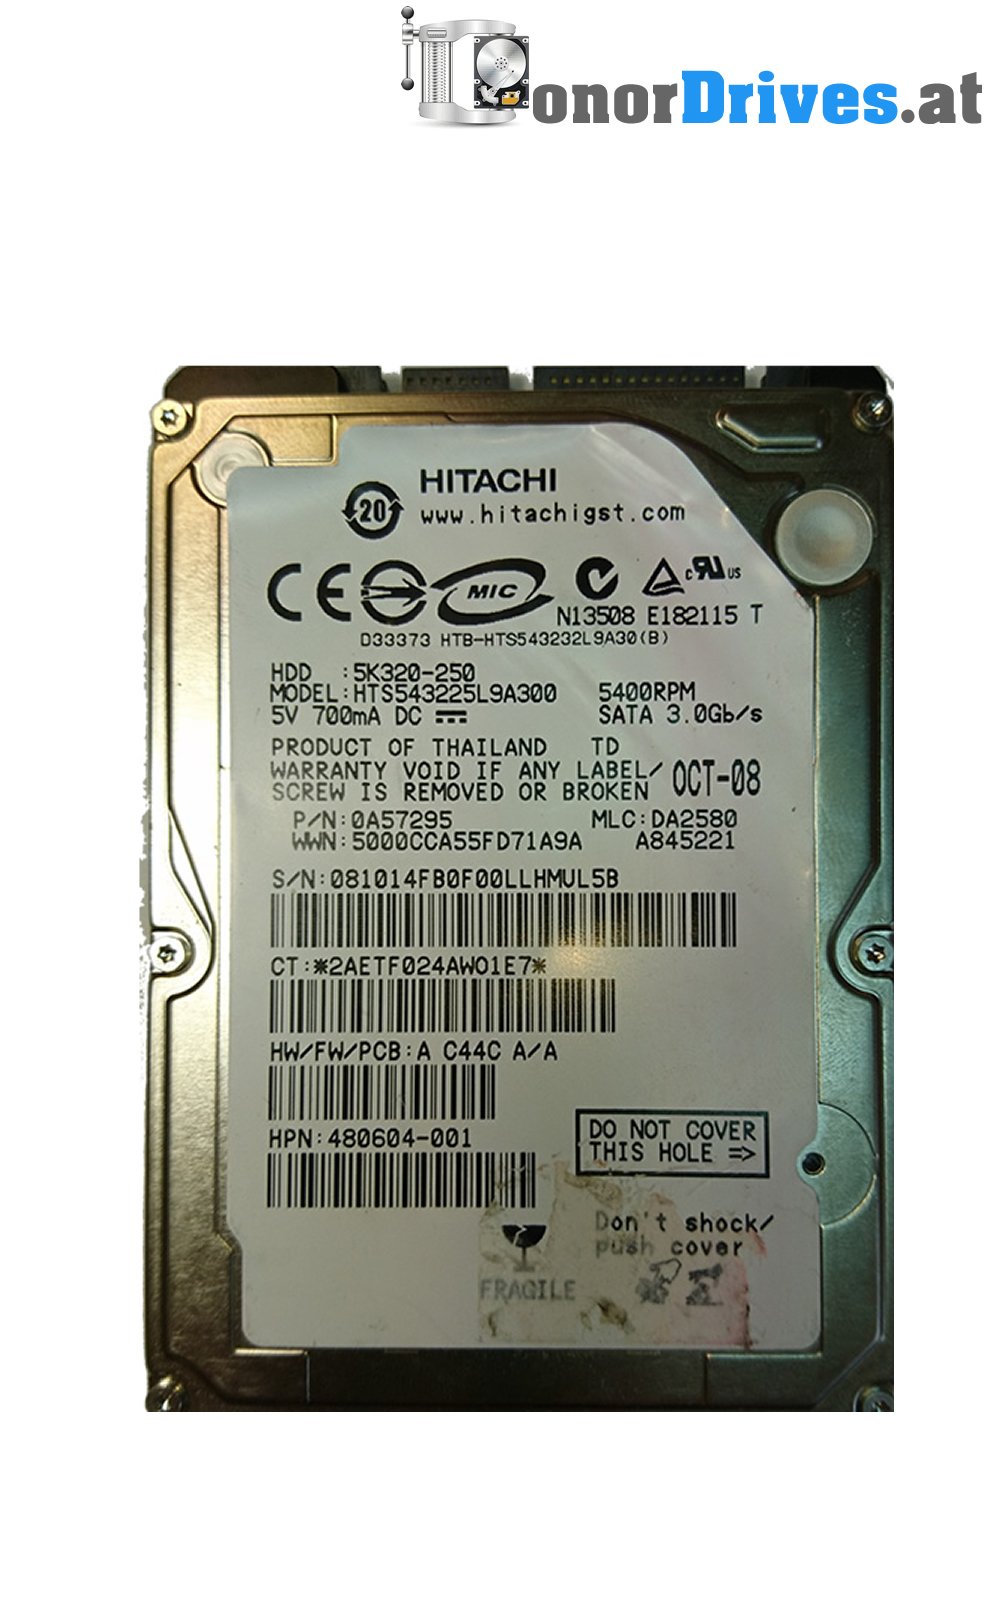 Hitachi: Hitachi - HTS543225L9A300 - 0A572925 - 250 GB - 220 